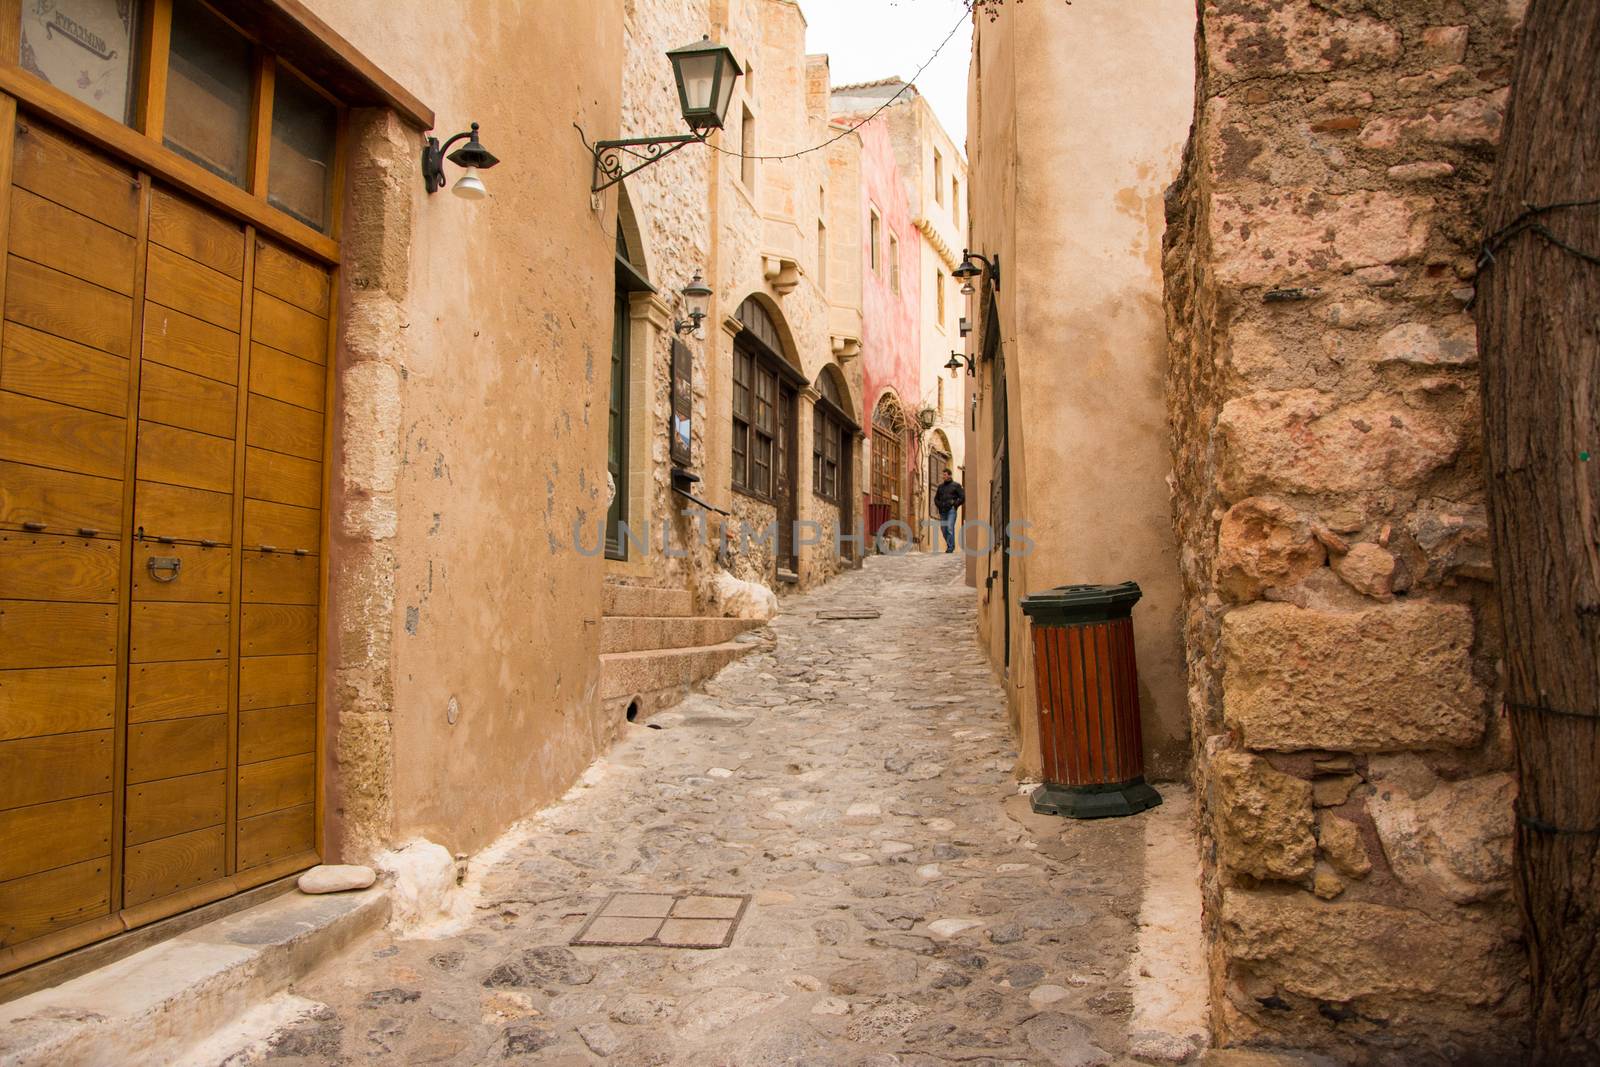 Taking a nice walk inside Monemvasia narrow stone built alleys.